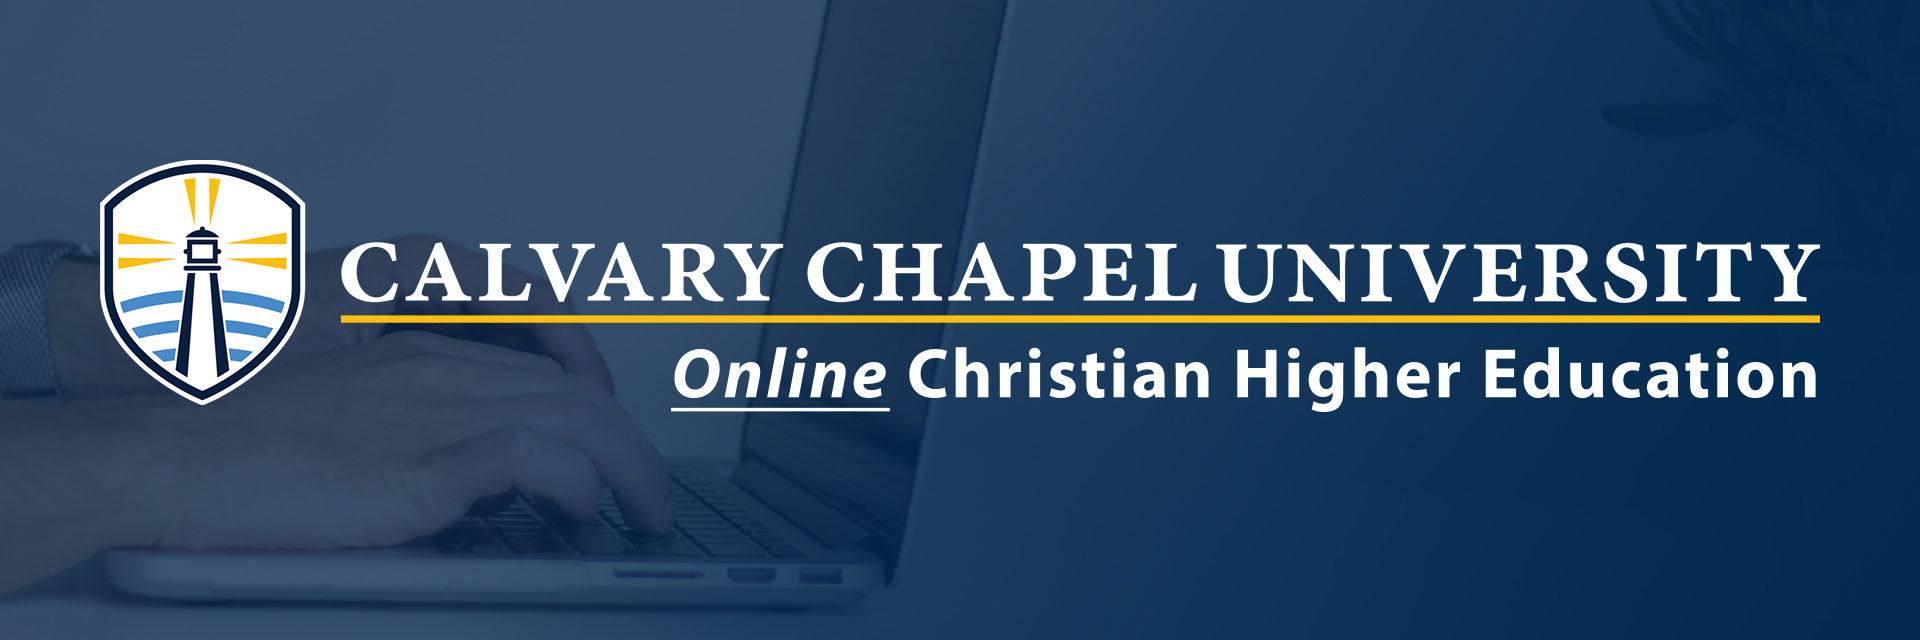 Calvary Chapel University